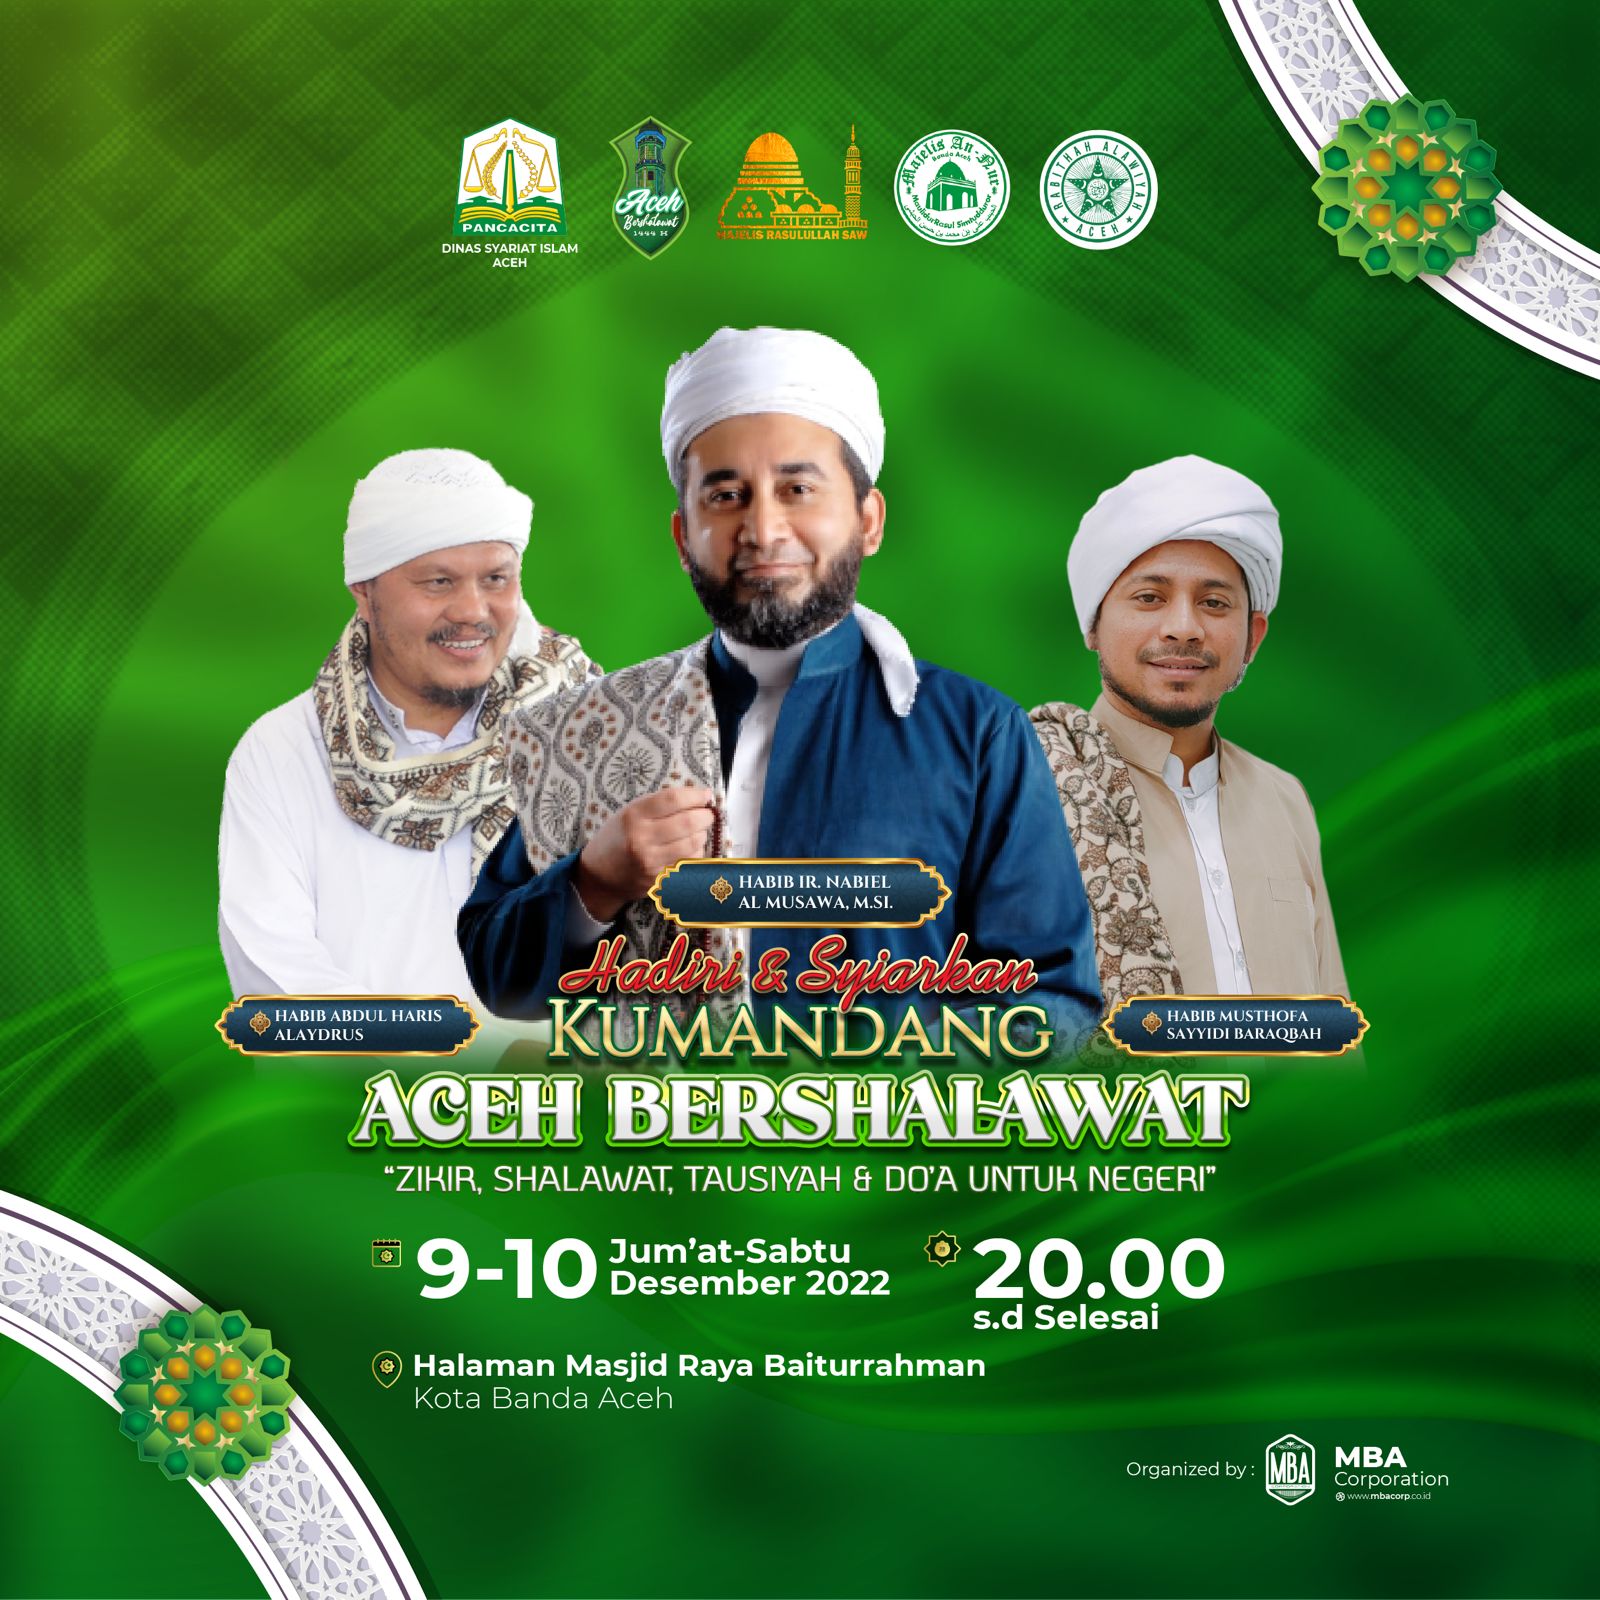 Gelorakan ‘Aceh Bershalawat’ DSI undang Habib Nabil Al Musawa Bogor